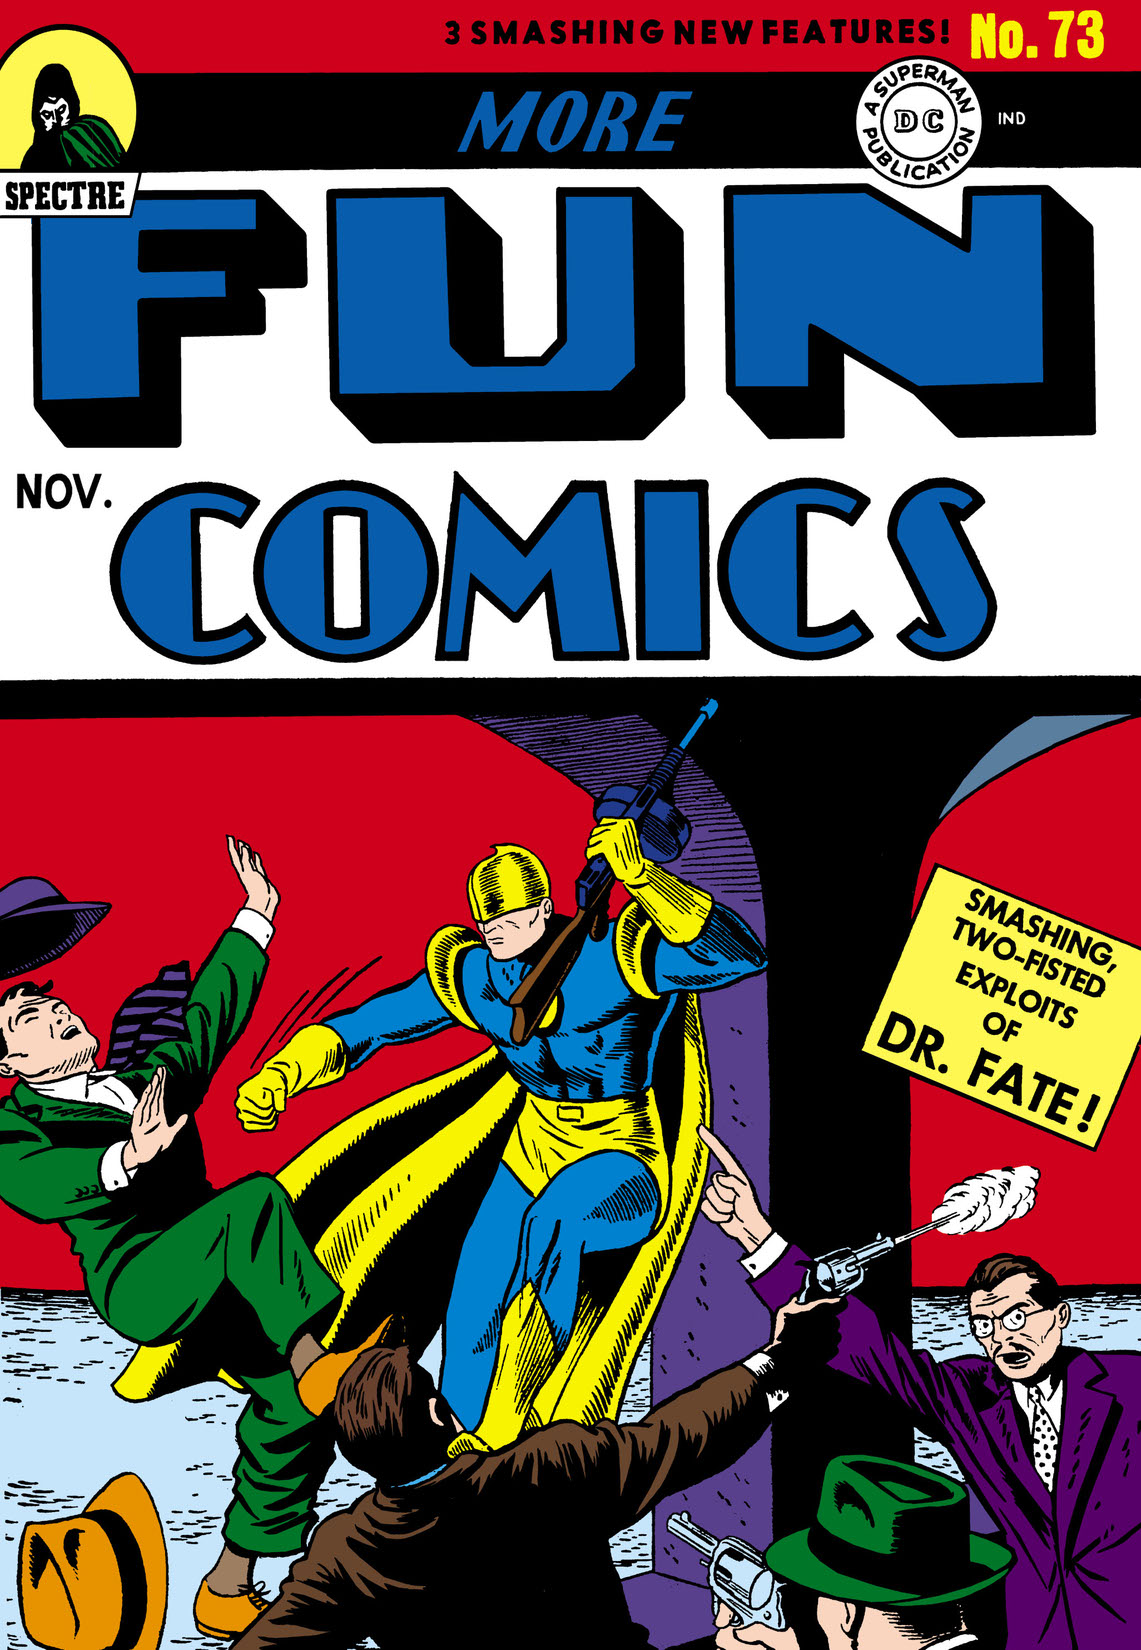 More Fun Comics #73 preview images